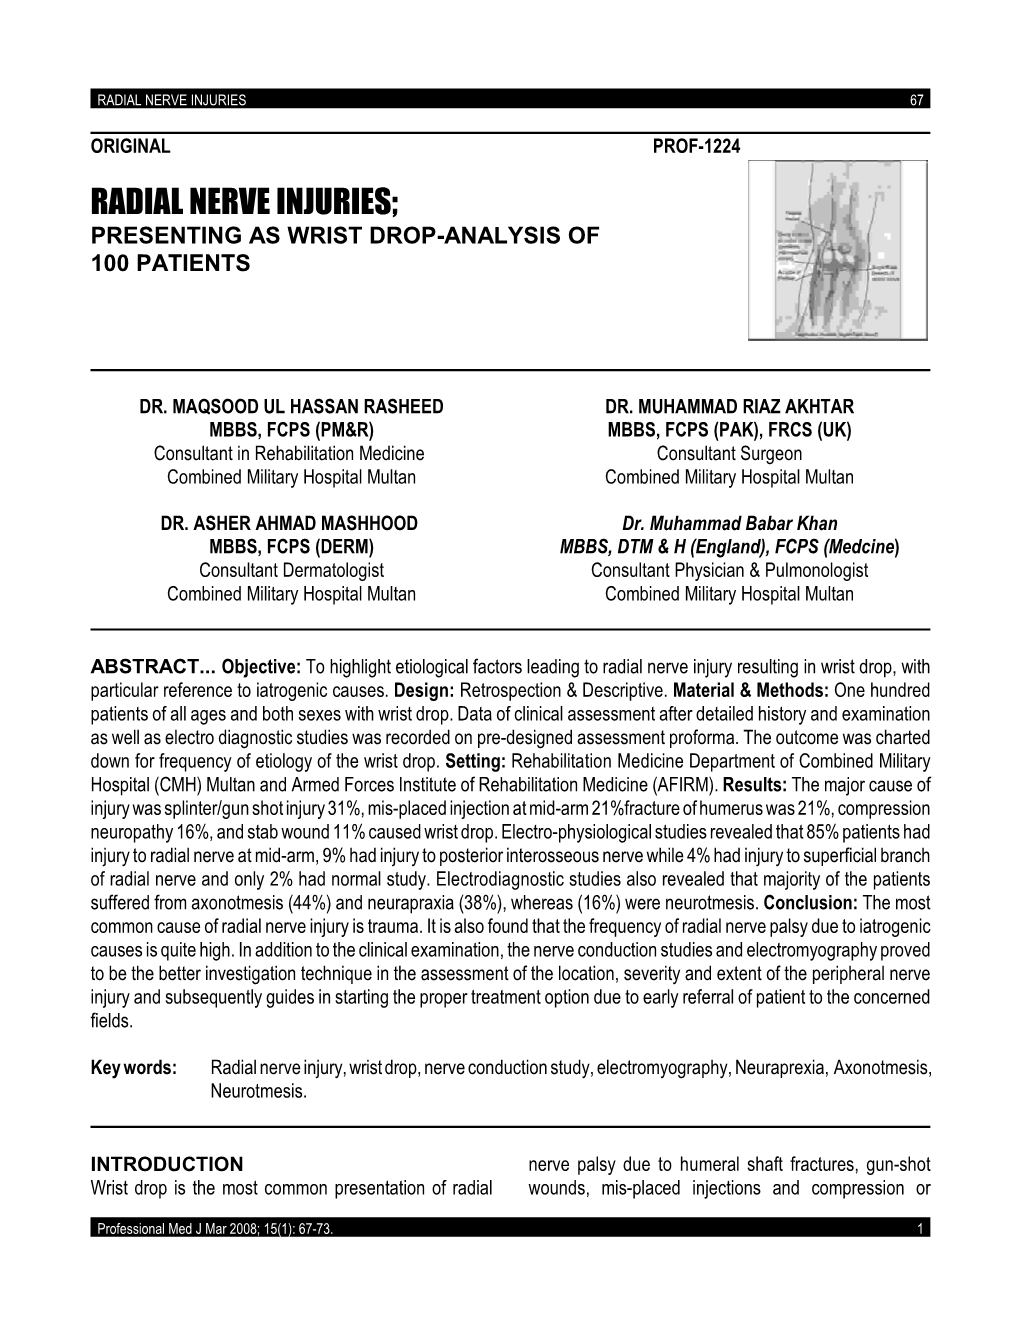 Radial Nerve Injuries; Presenting As Wrist Drop-Analysis of 100 Patients